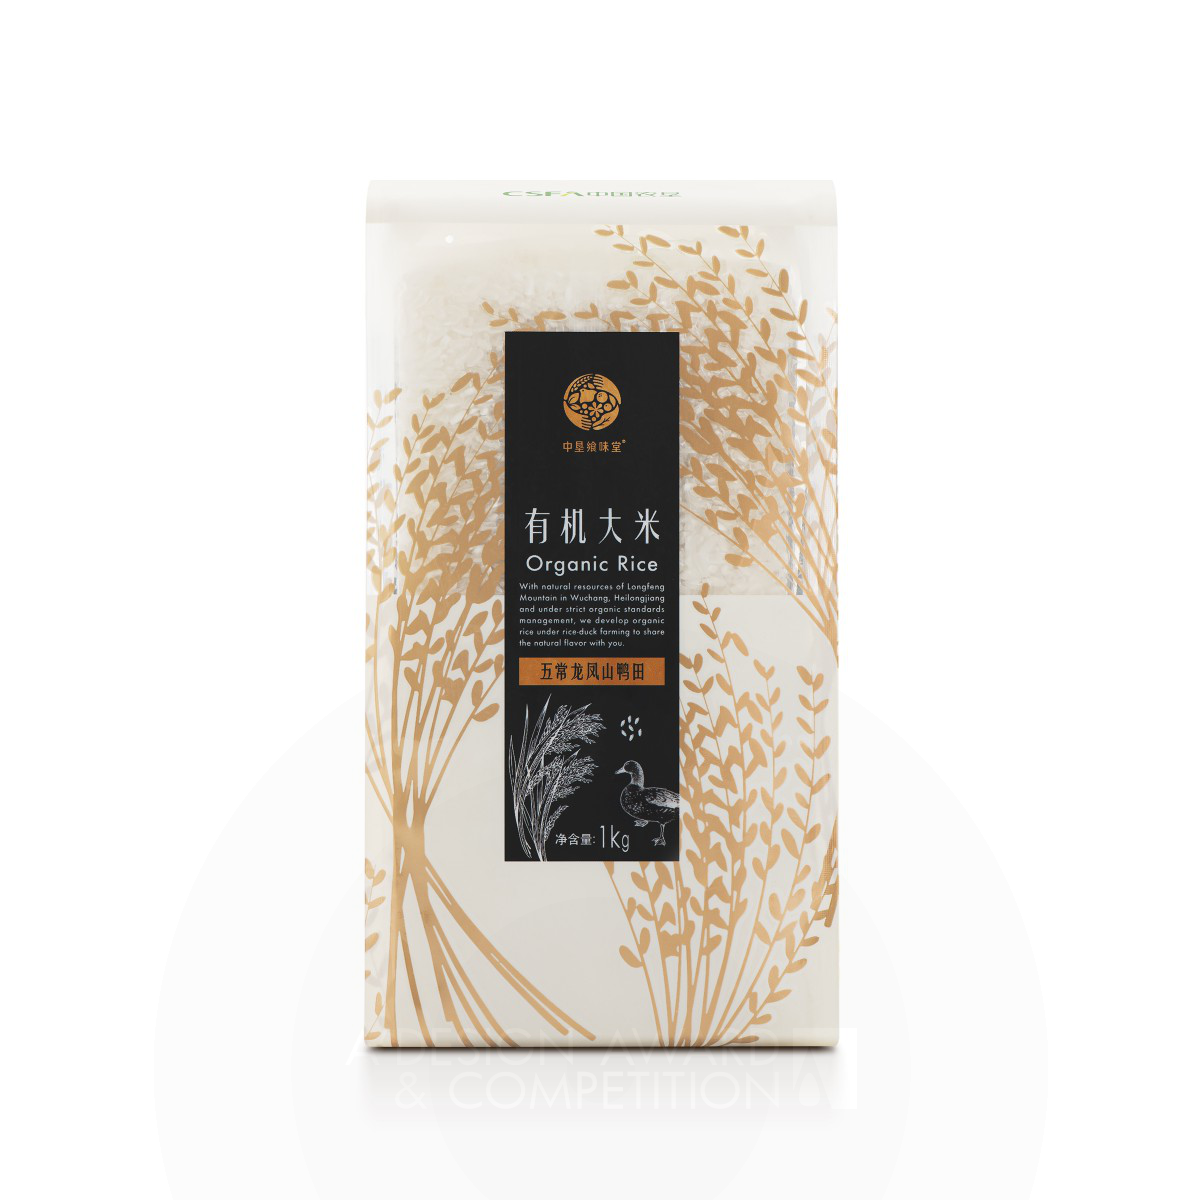 Fudesign's Award-Winning Organic Rice Packaging Design